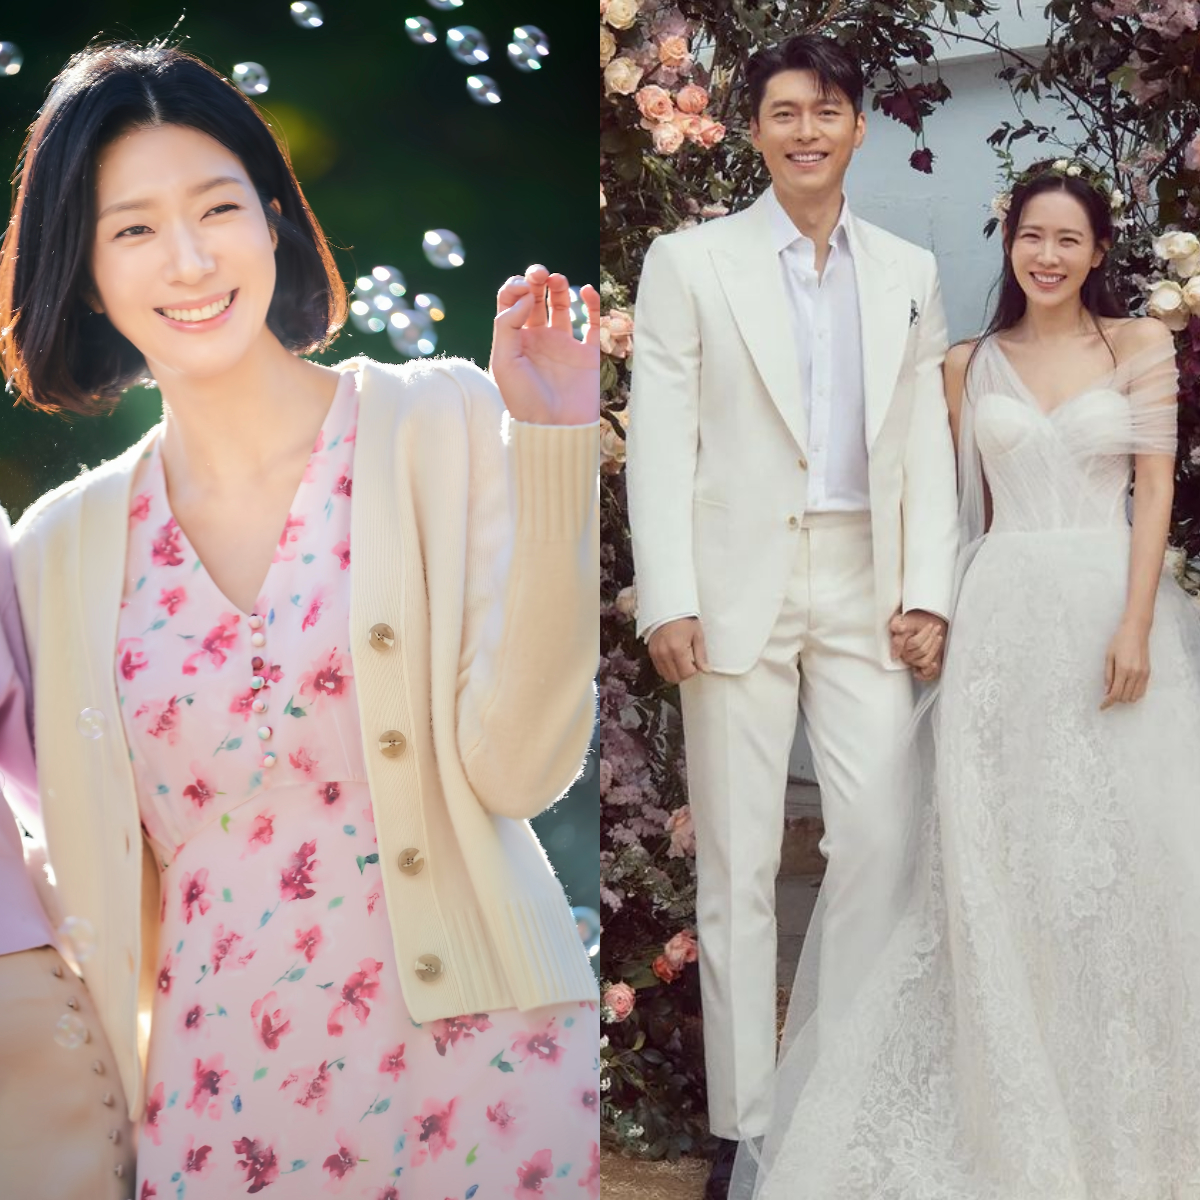 EXCLUSIVE: Thirty-Nine star Kim Ji Hyun wishes a happy future for BinJin after Son Ye Jin & Hyun Bin's wedding